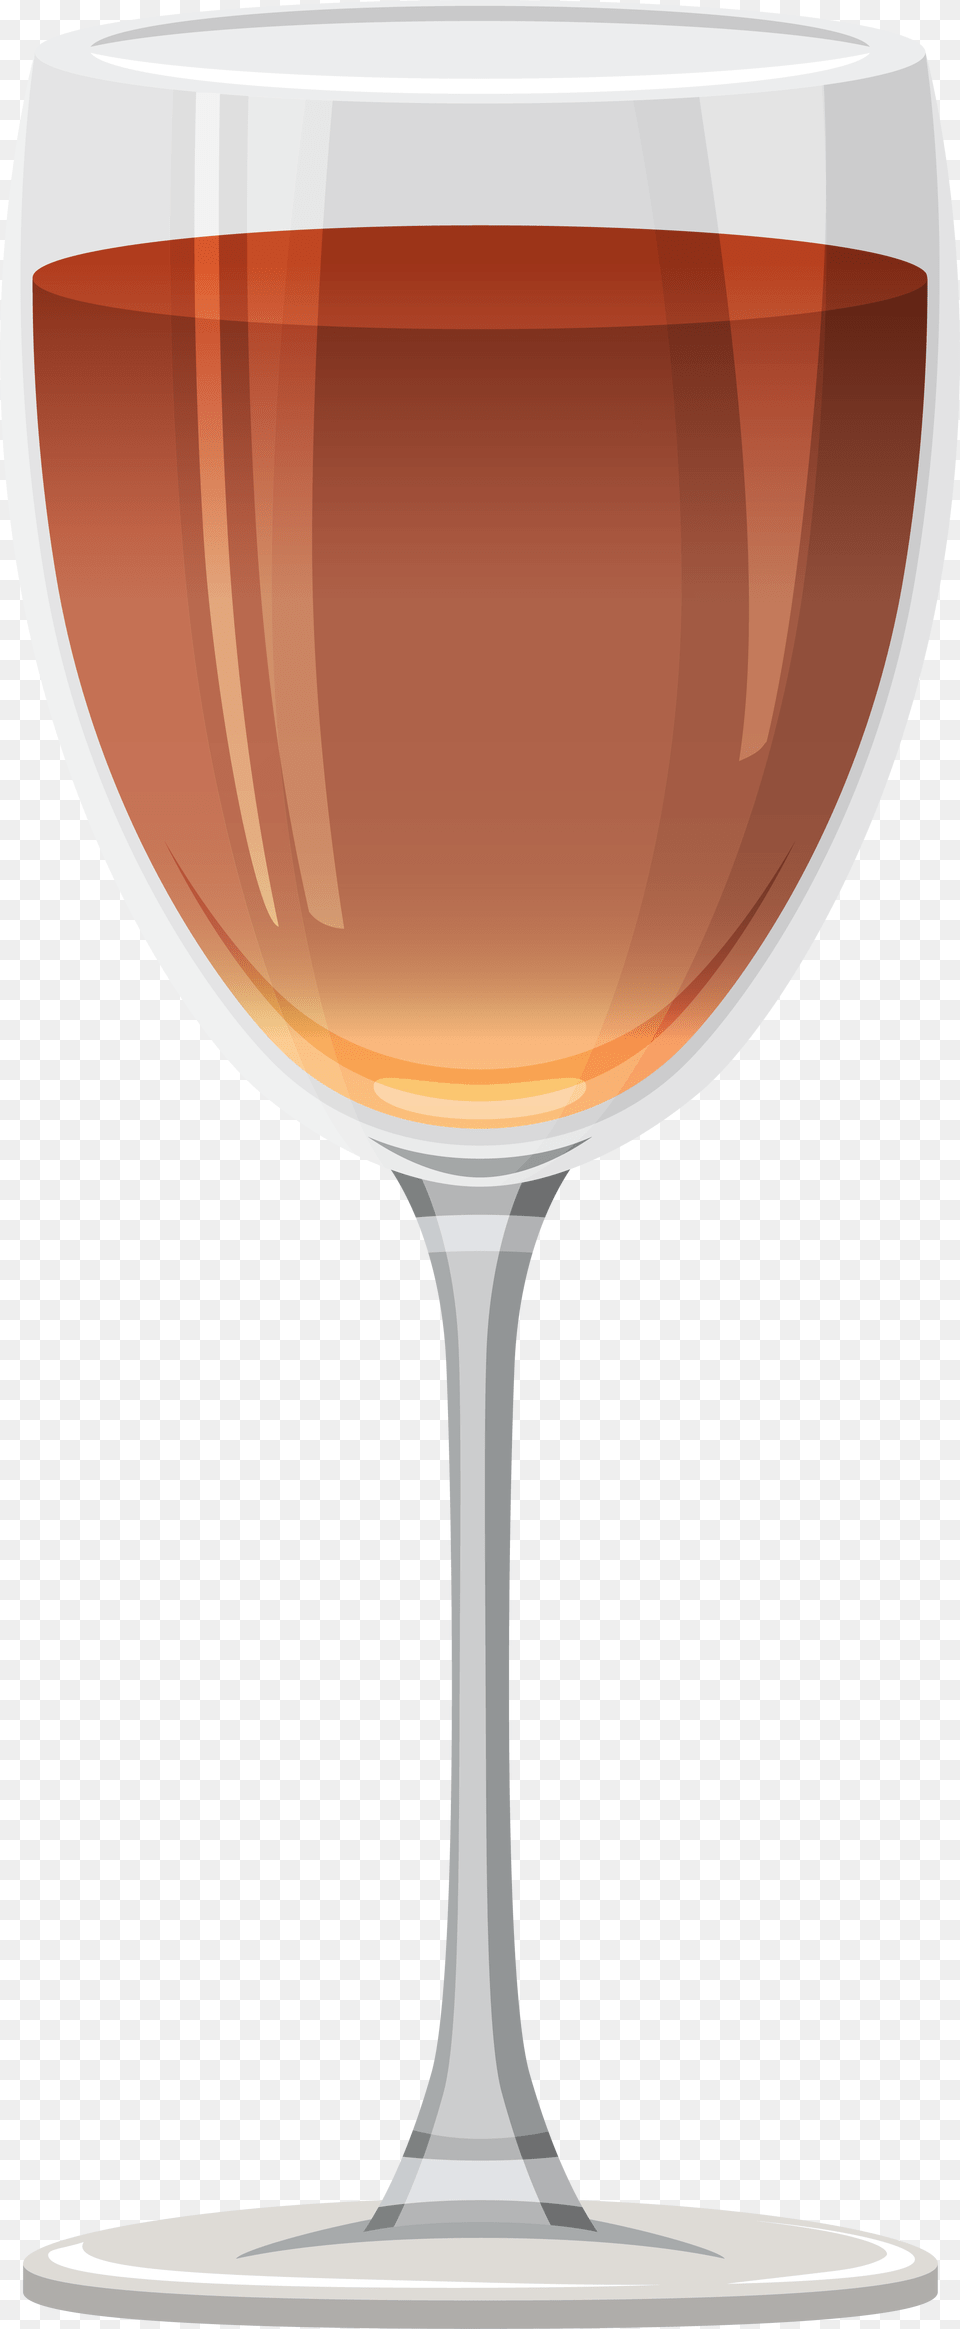 Wineglass, Alcohol, Wine, Liquor, Wine Glass Png Image